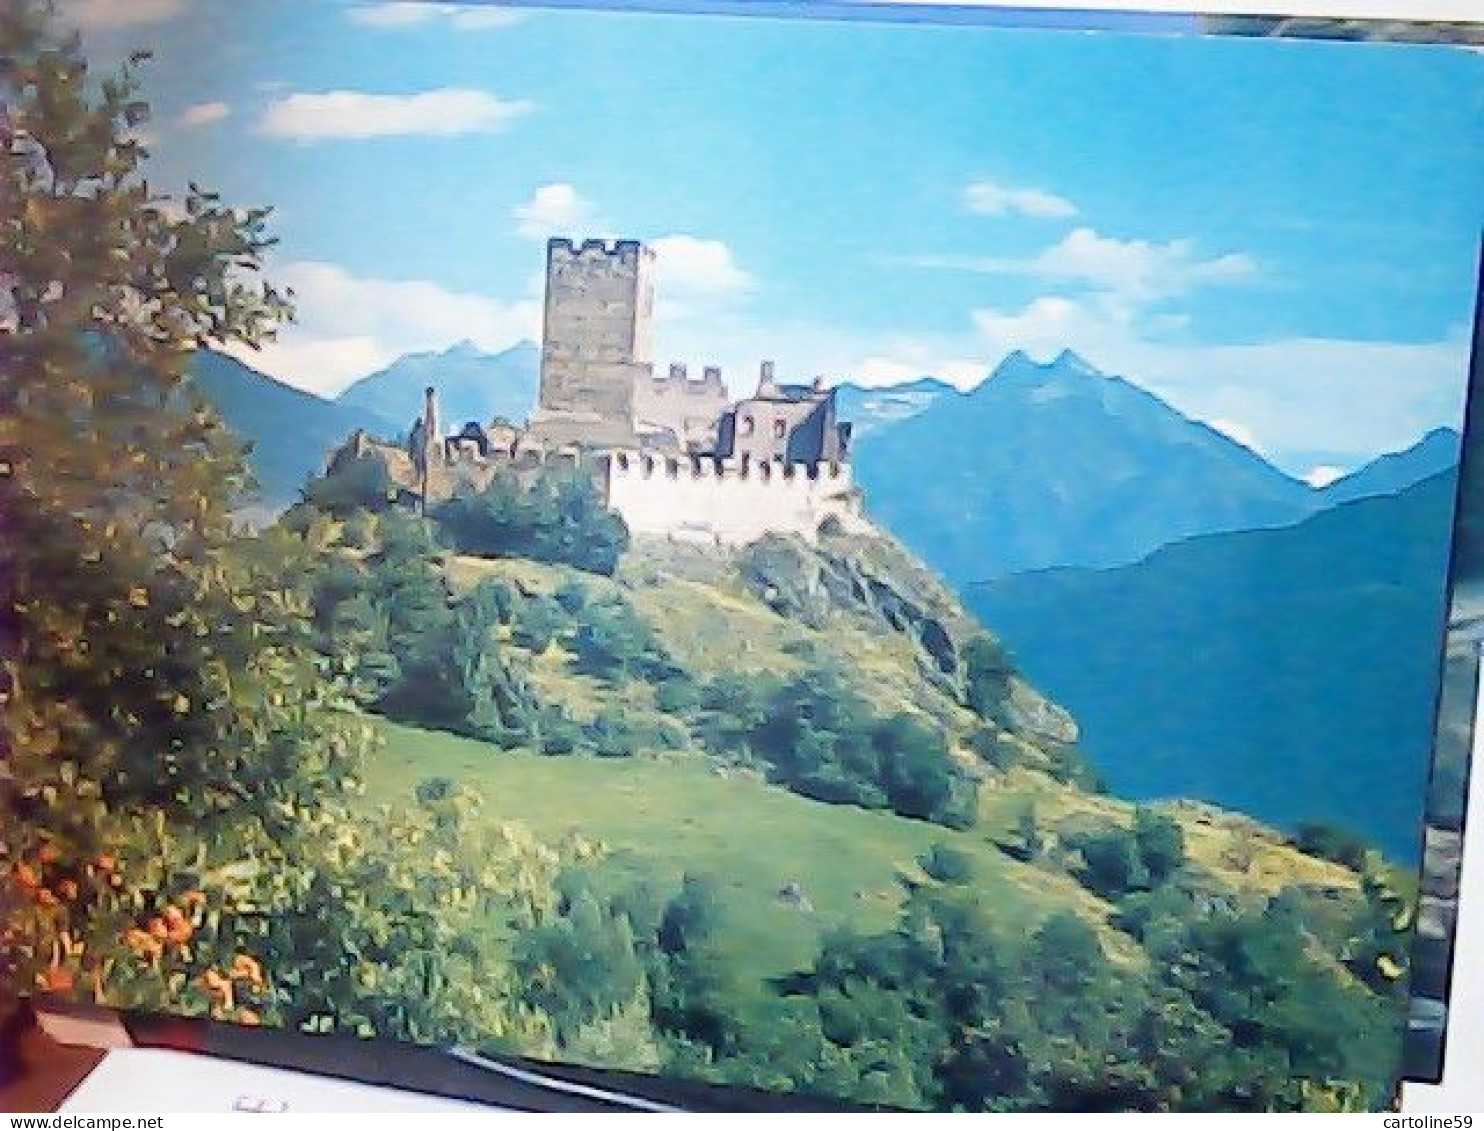 106 CARD cards Val d'Aosta:vrie localita LOTTO BELLO  VBN1935< JV6514